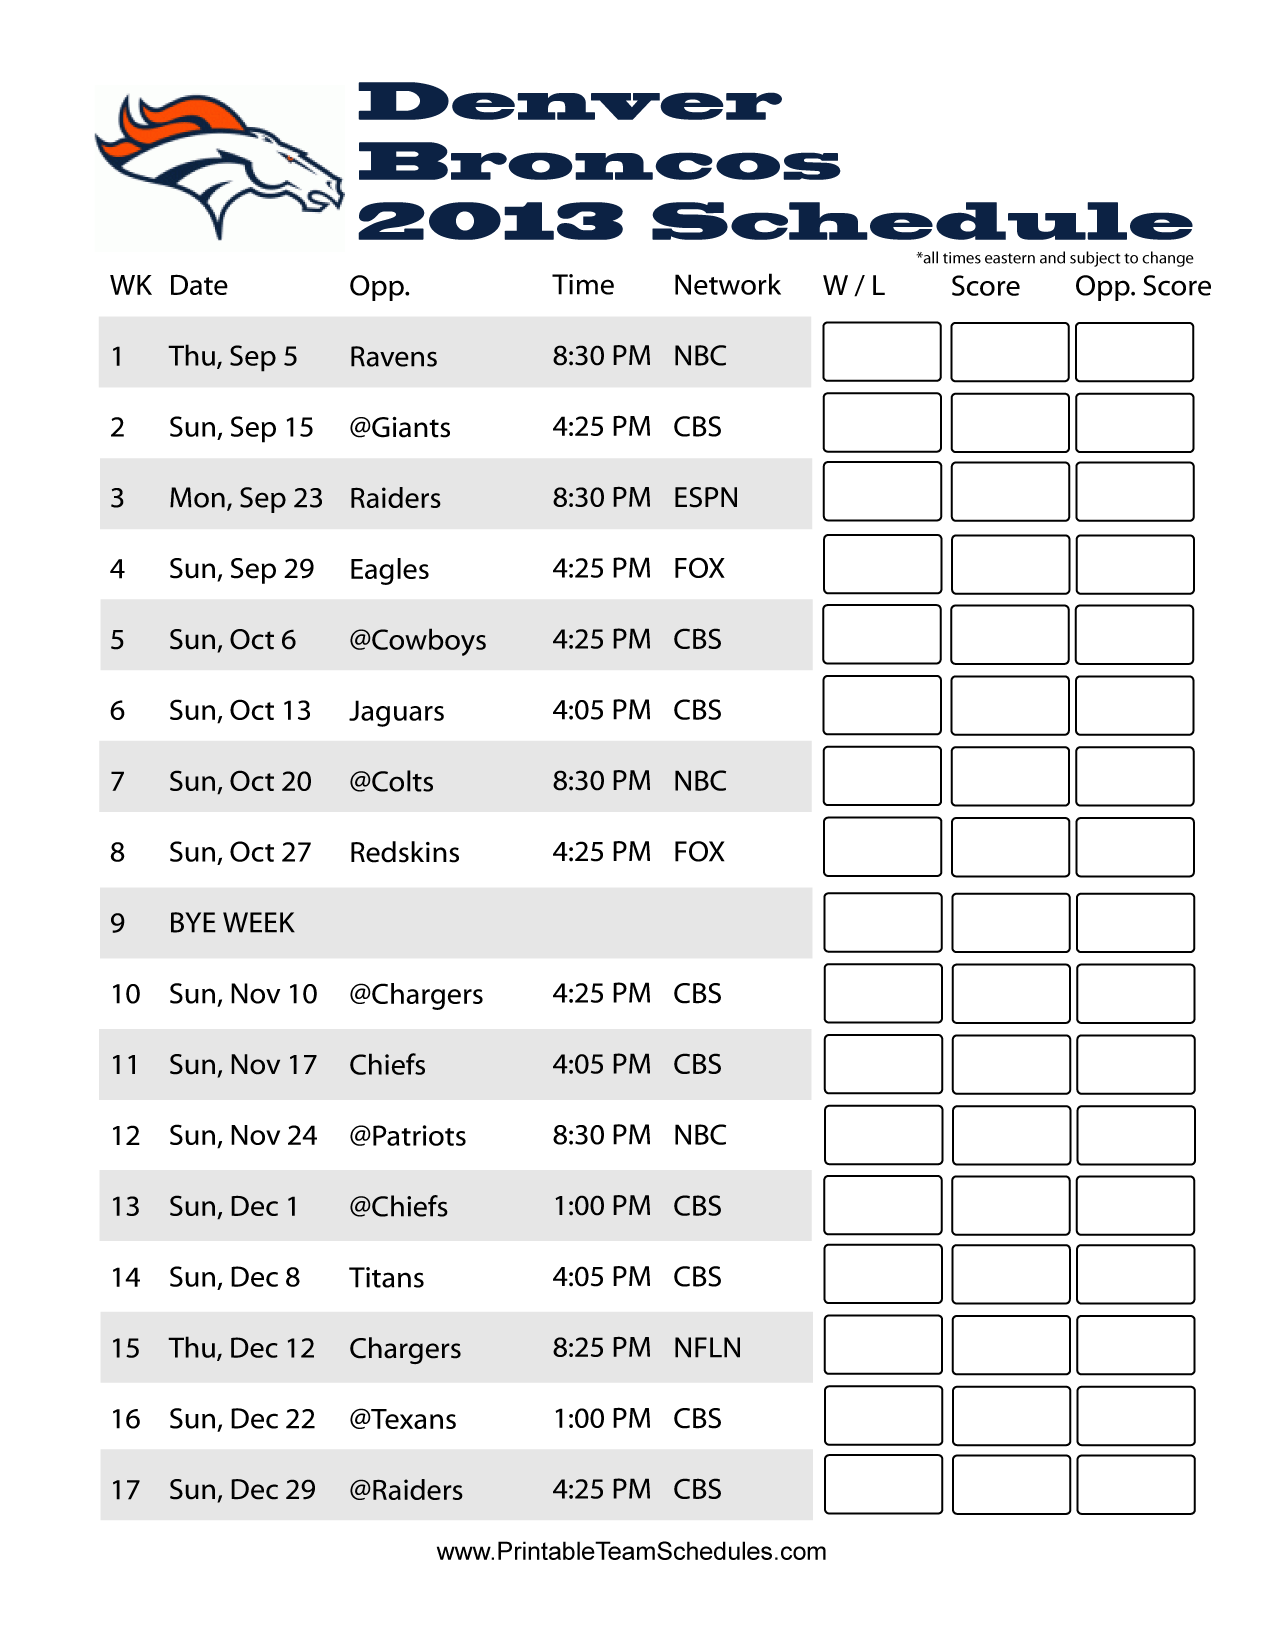 [50+] Denver Broncos 2016 Schedule Wallpaper on WallpaperSafari